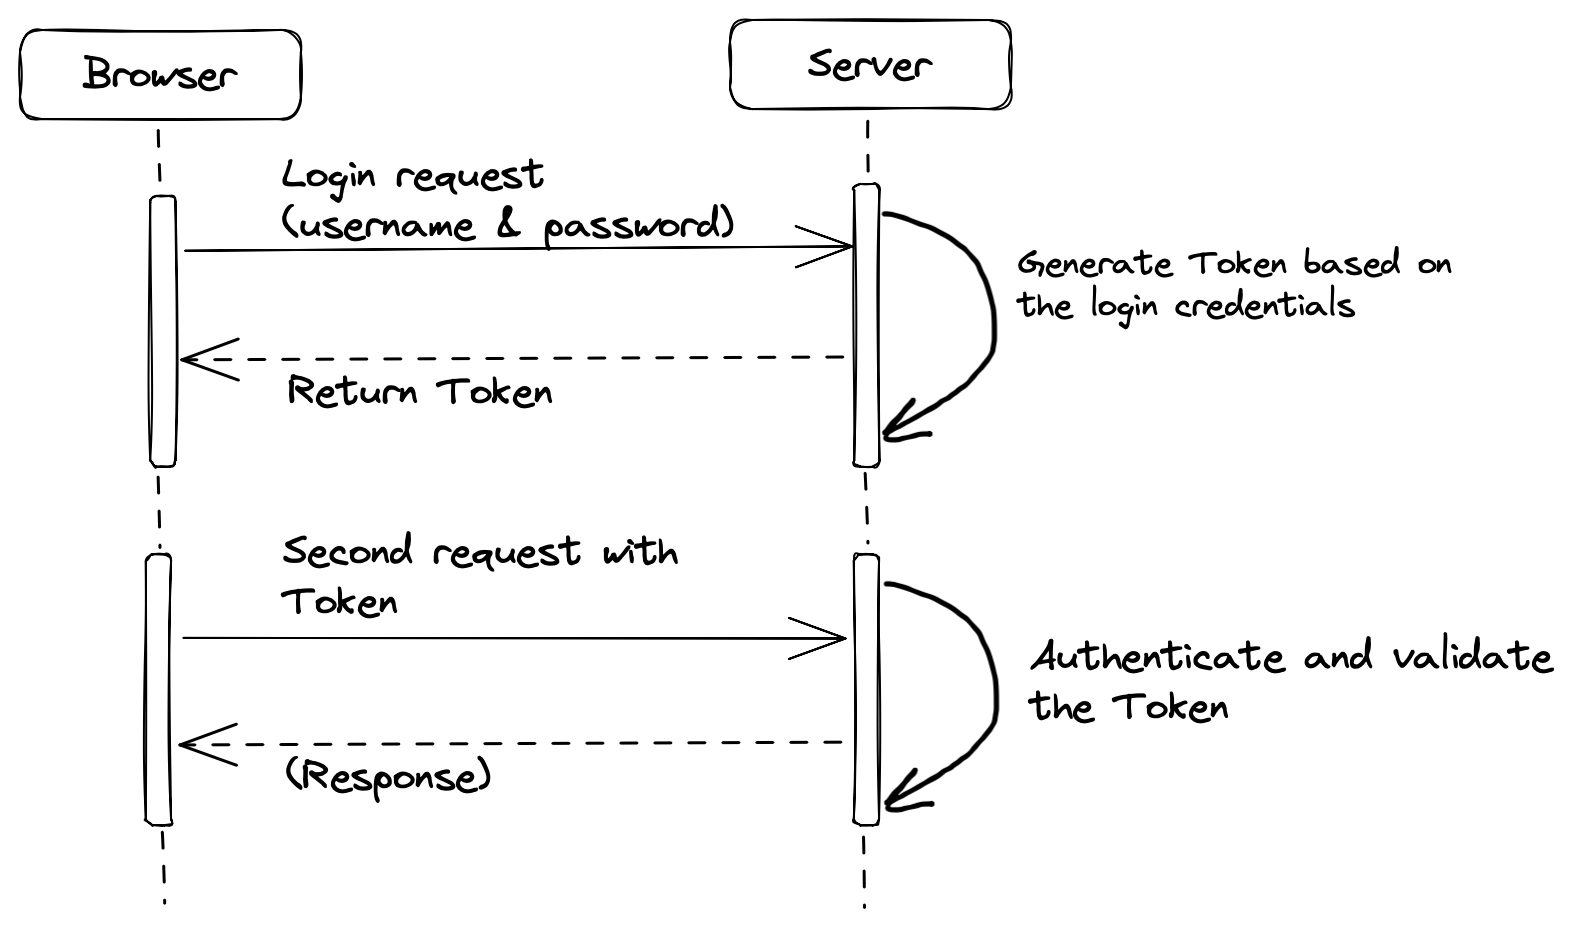 How access token works